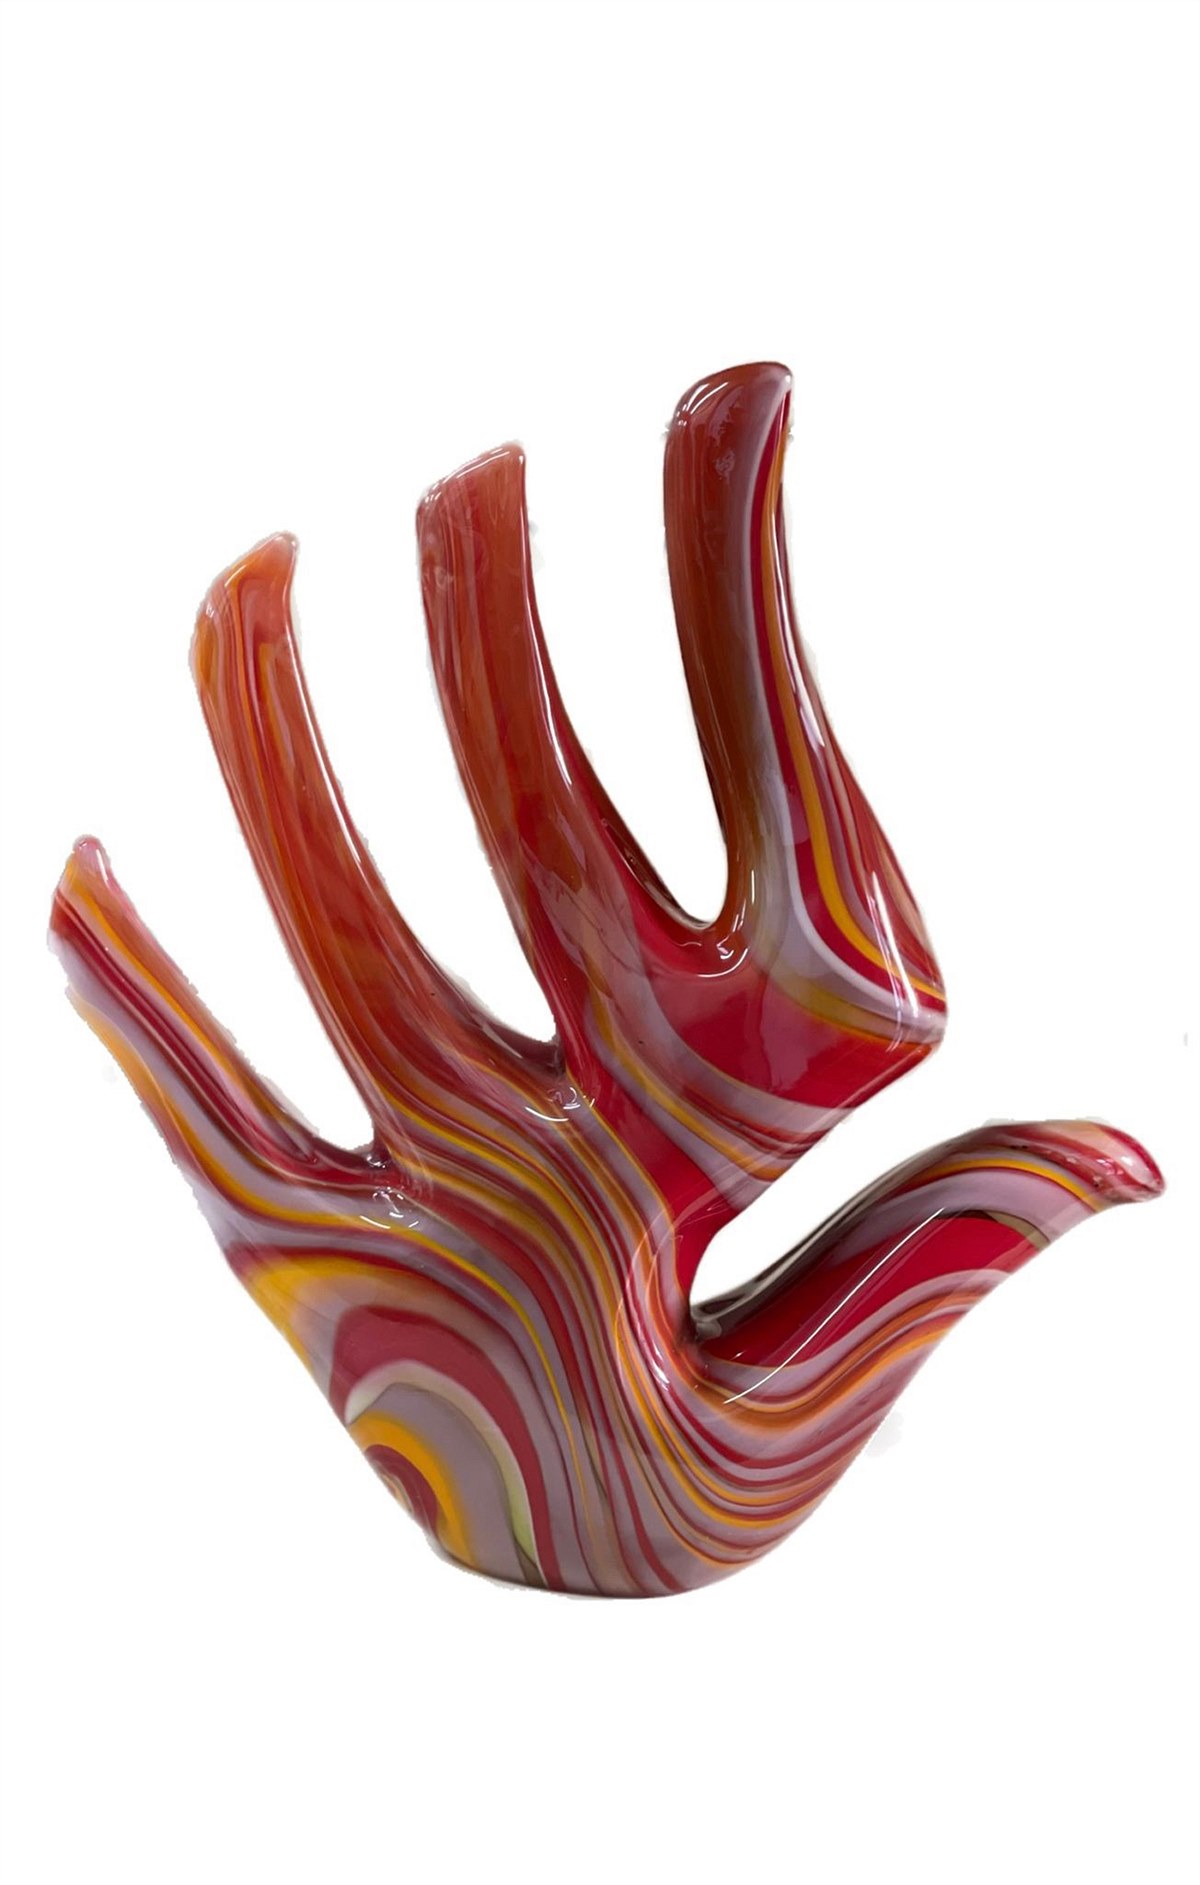 Give Peace a Hand_Skulptur_Wiedenhofer (6)